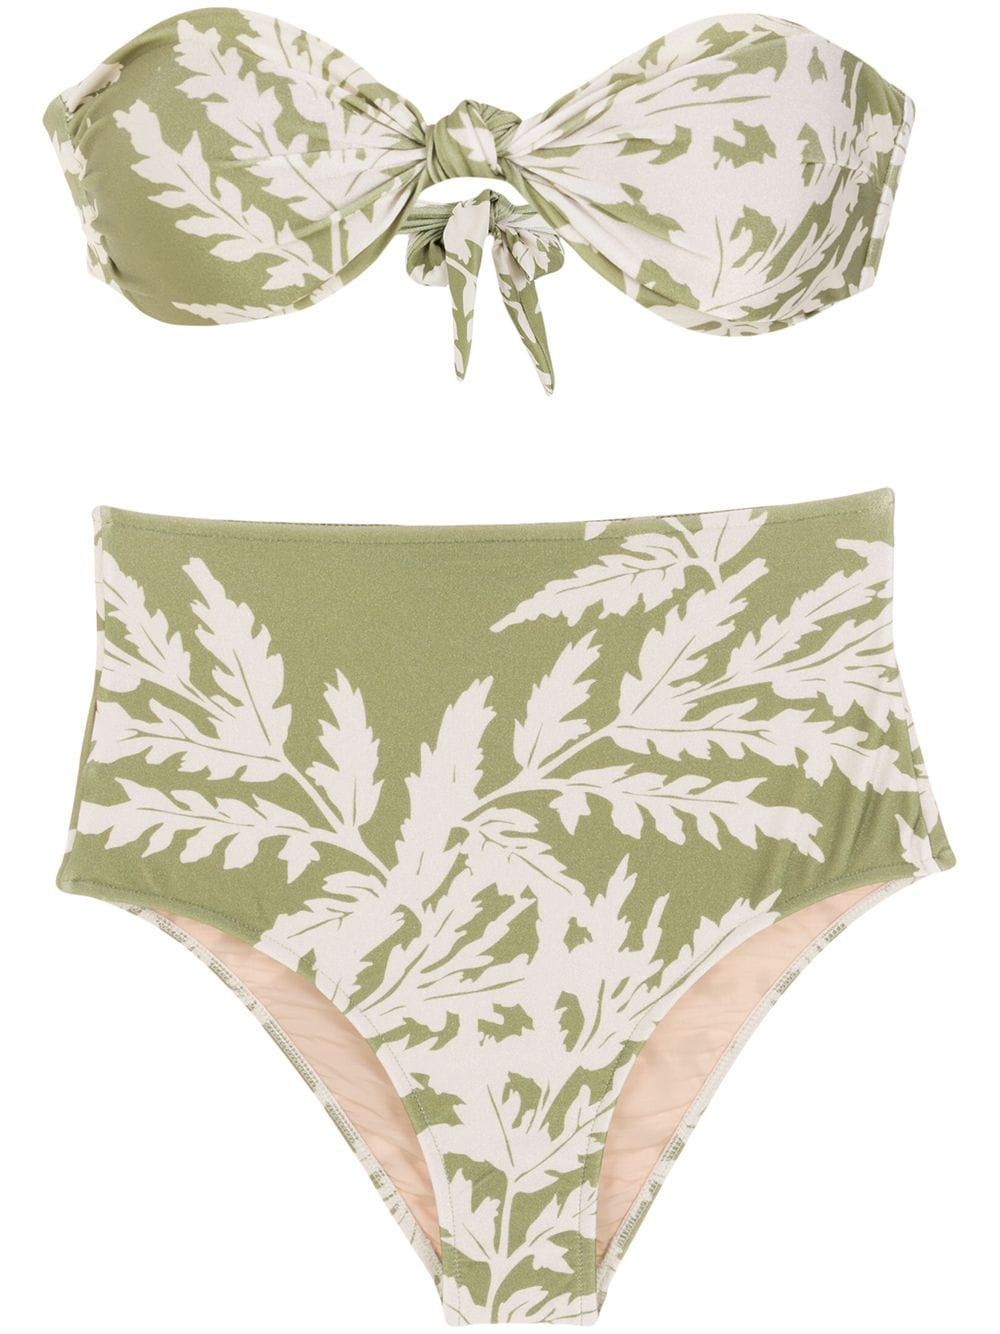 Classic Foliage Strapless High-Waisted Bikini Product